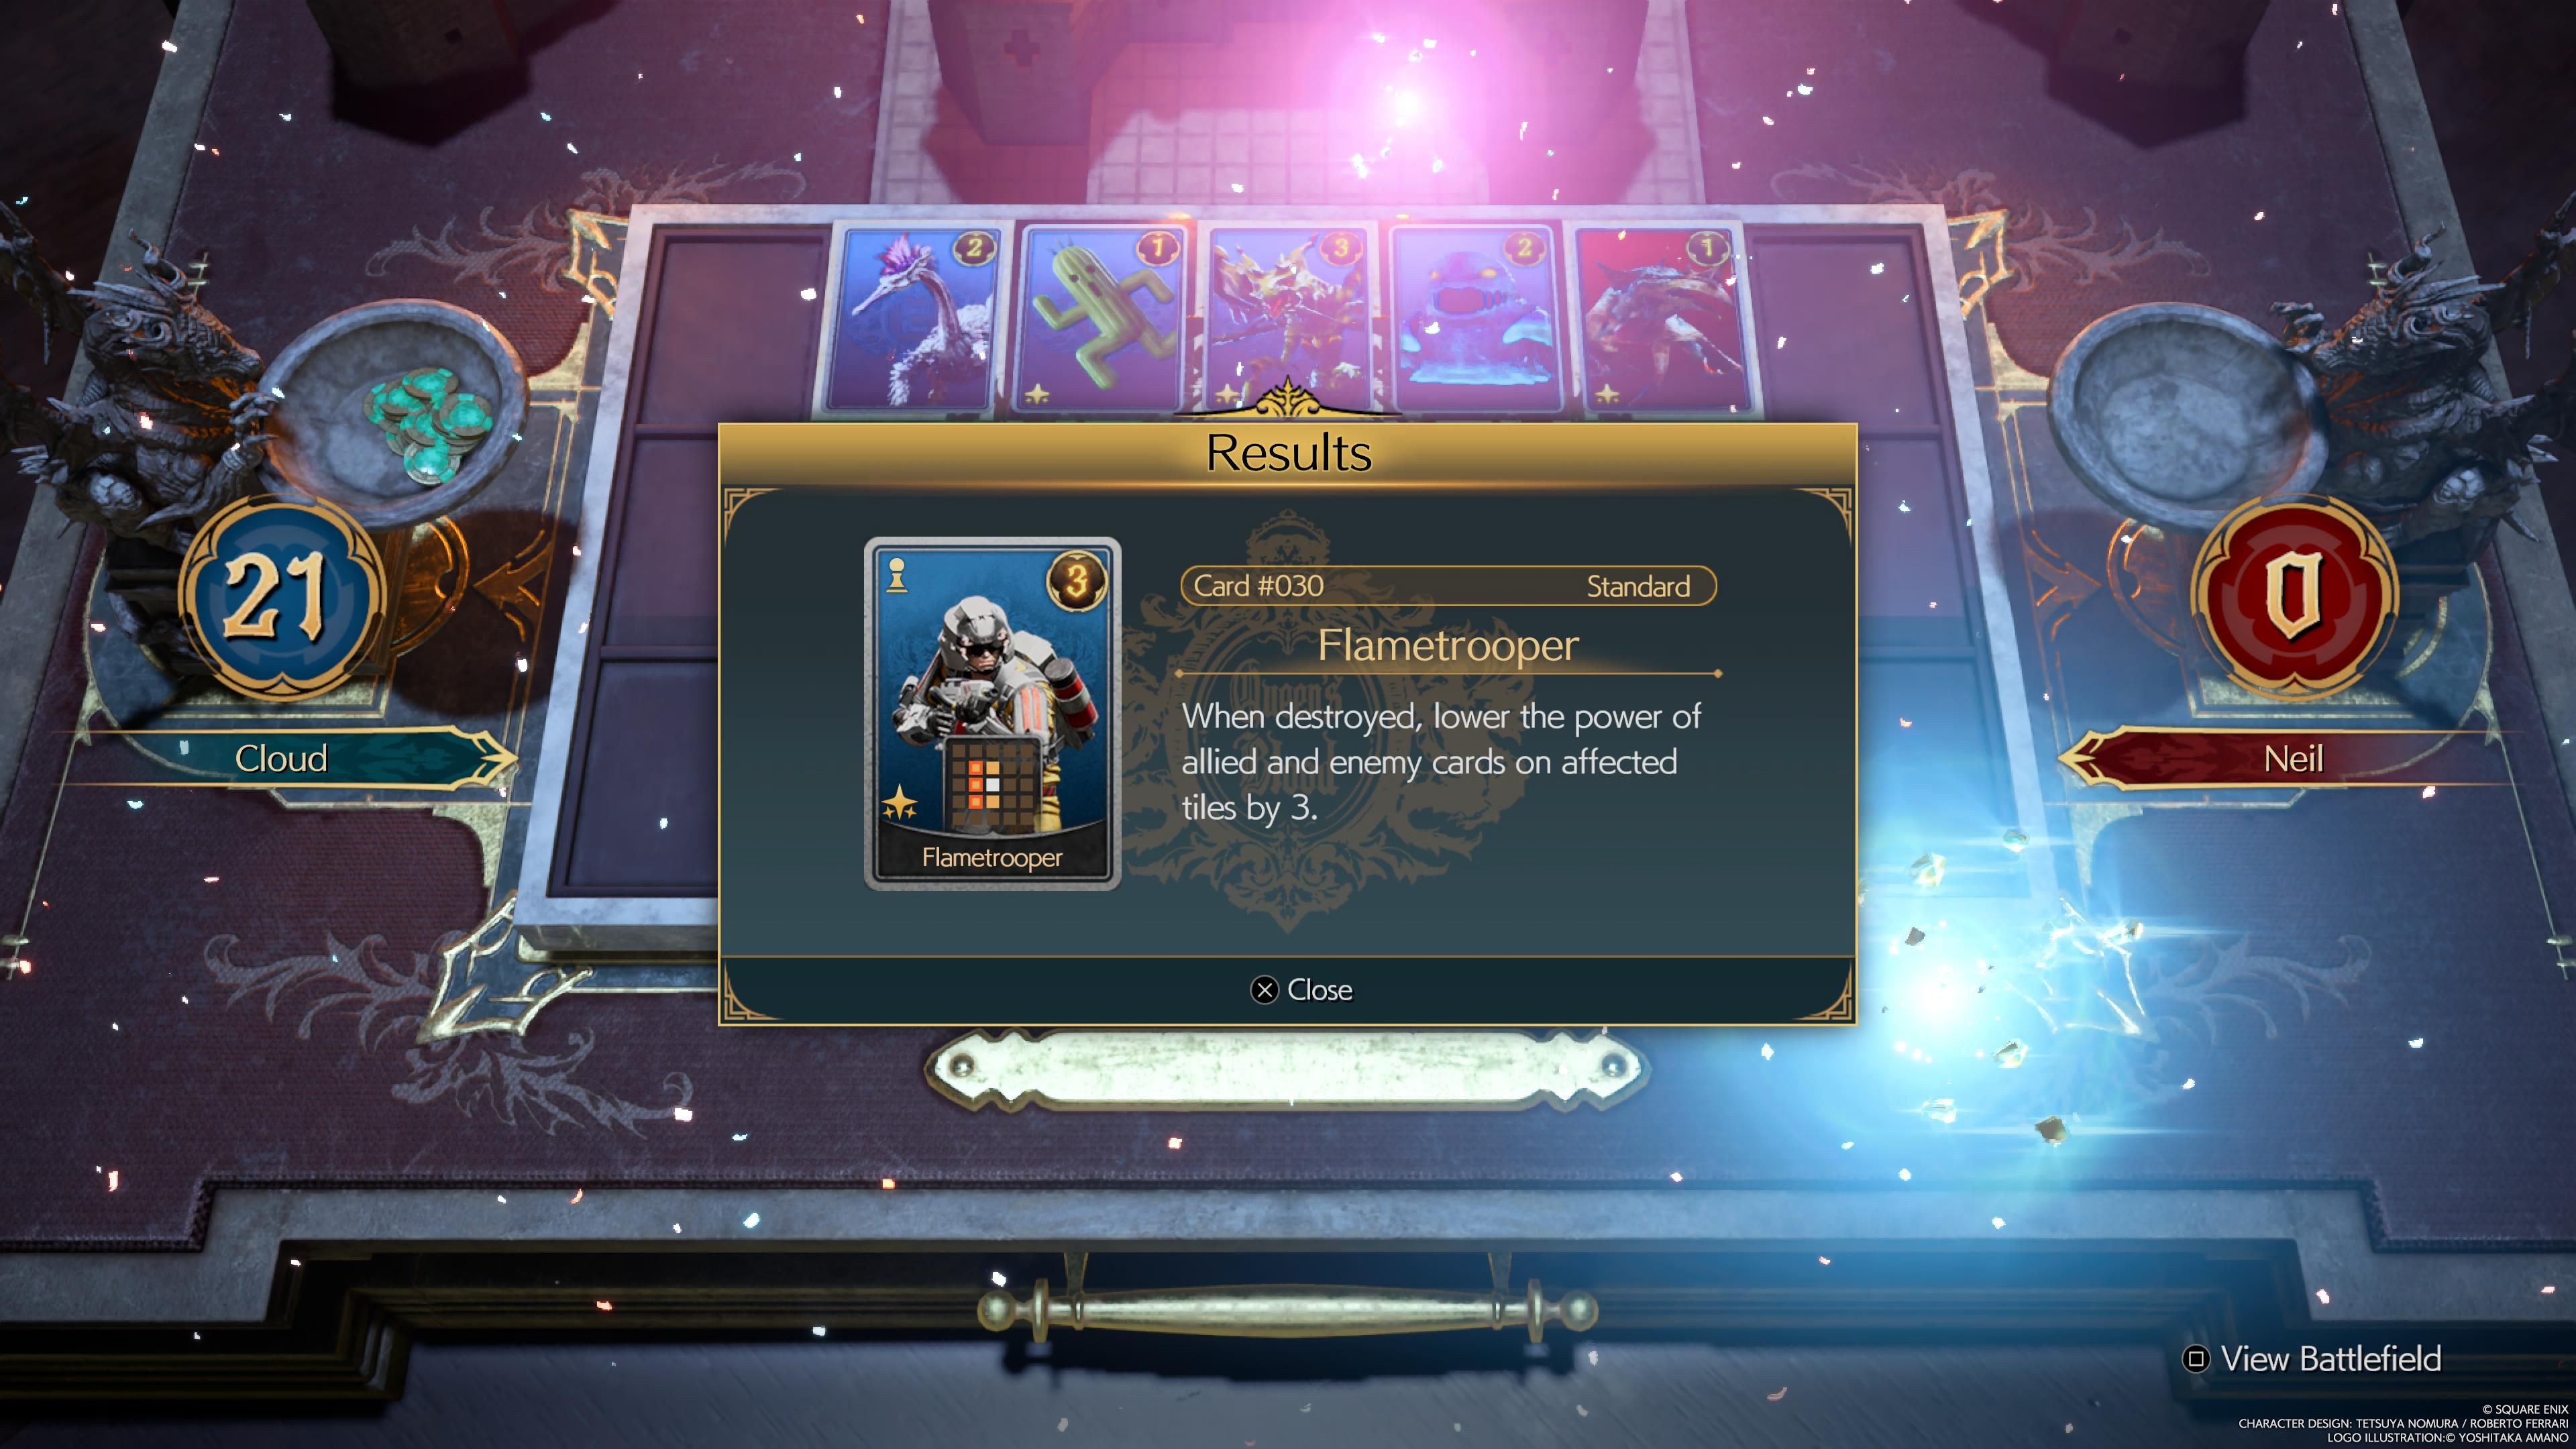 Flametrooper Reward for defeating Neil Final Fantasy 7 Rebirth